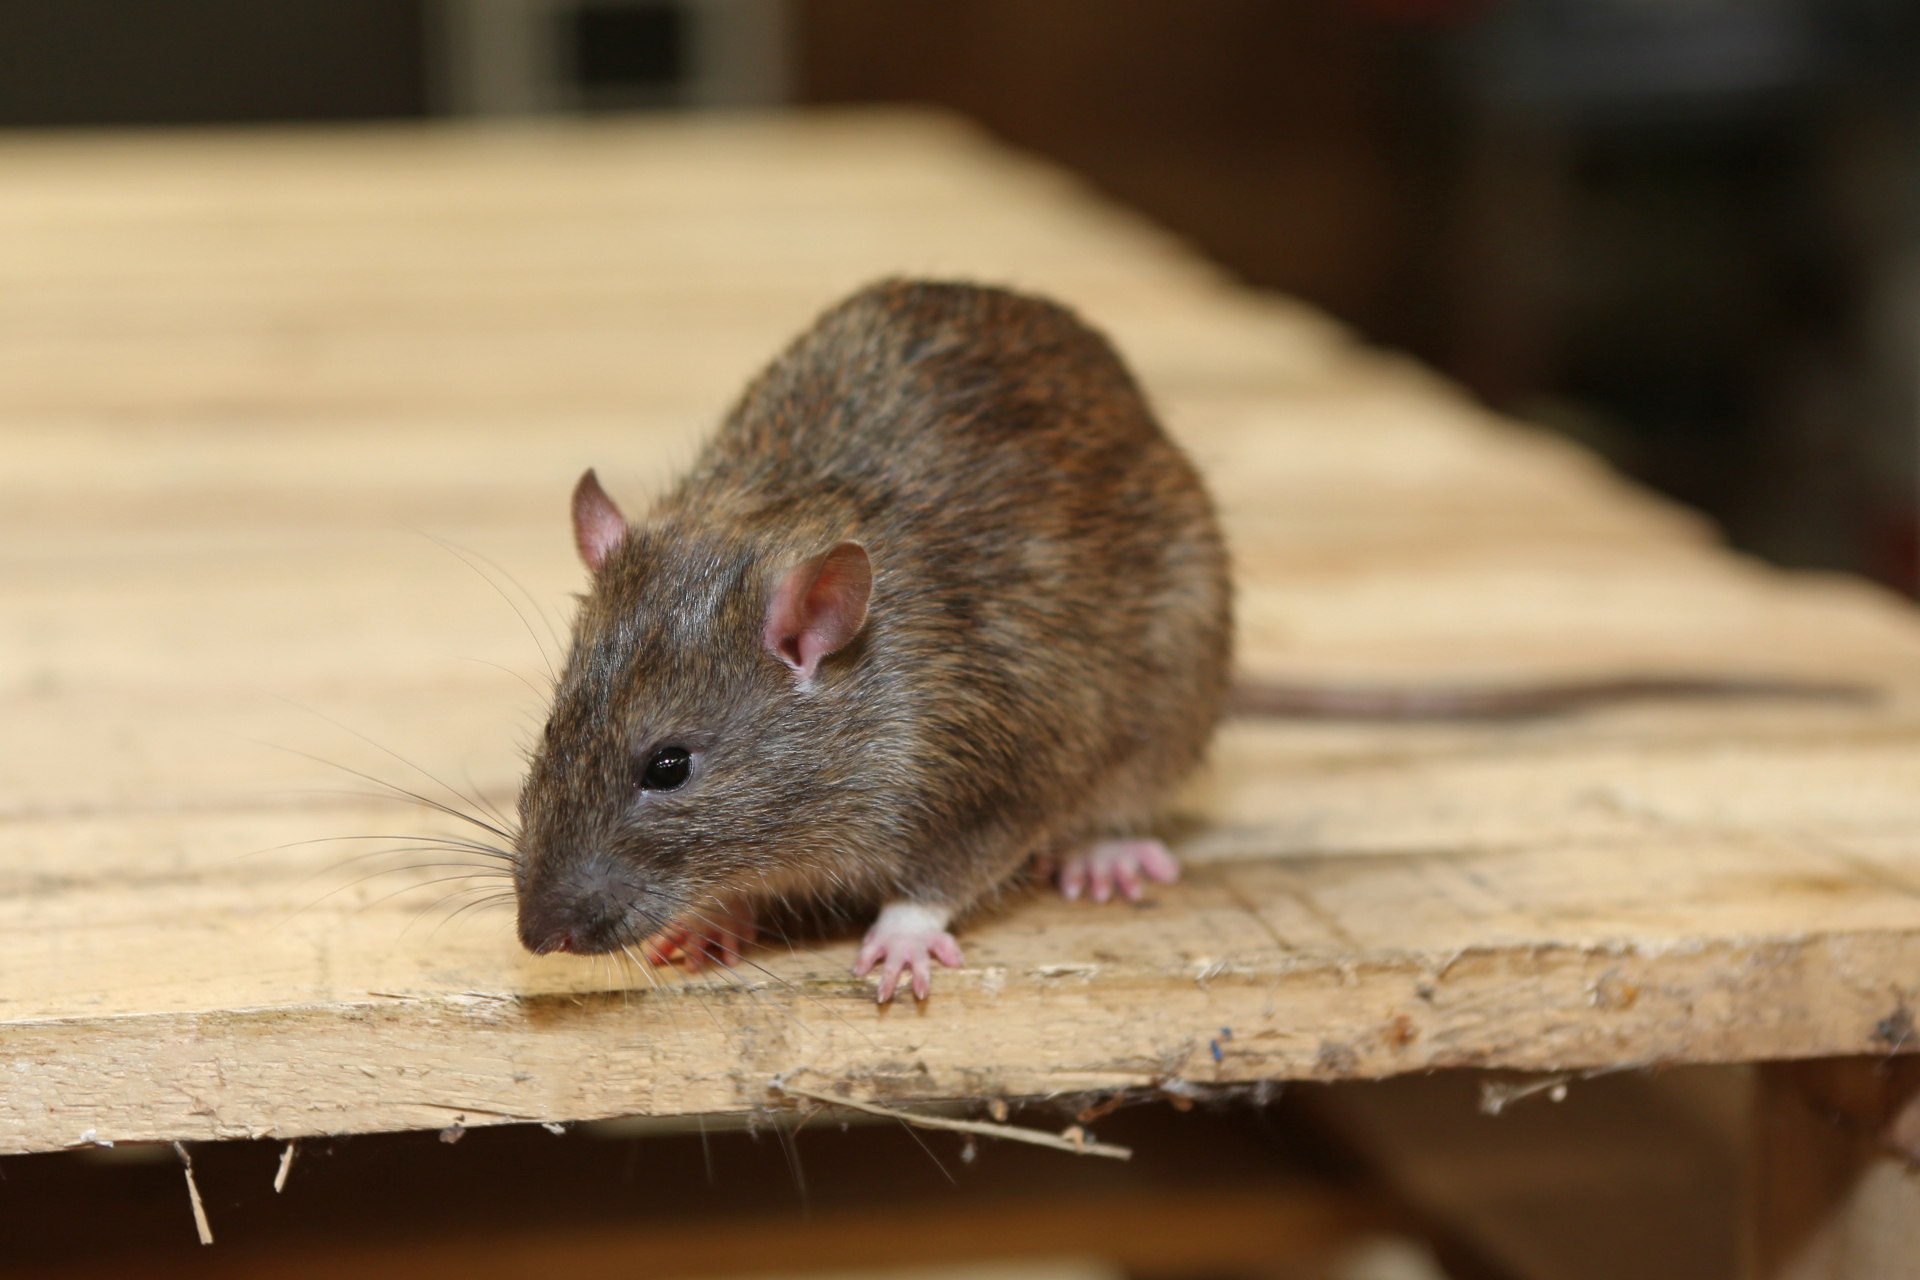 Rat extermination, Pest Control in Northwood, Moor Park, HA6. Call Now 020 8166 9746